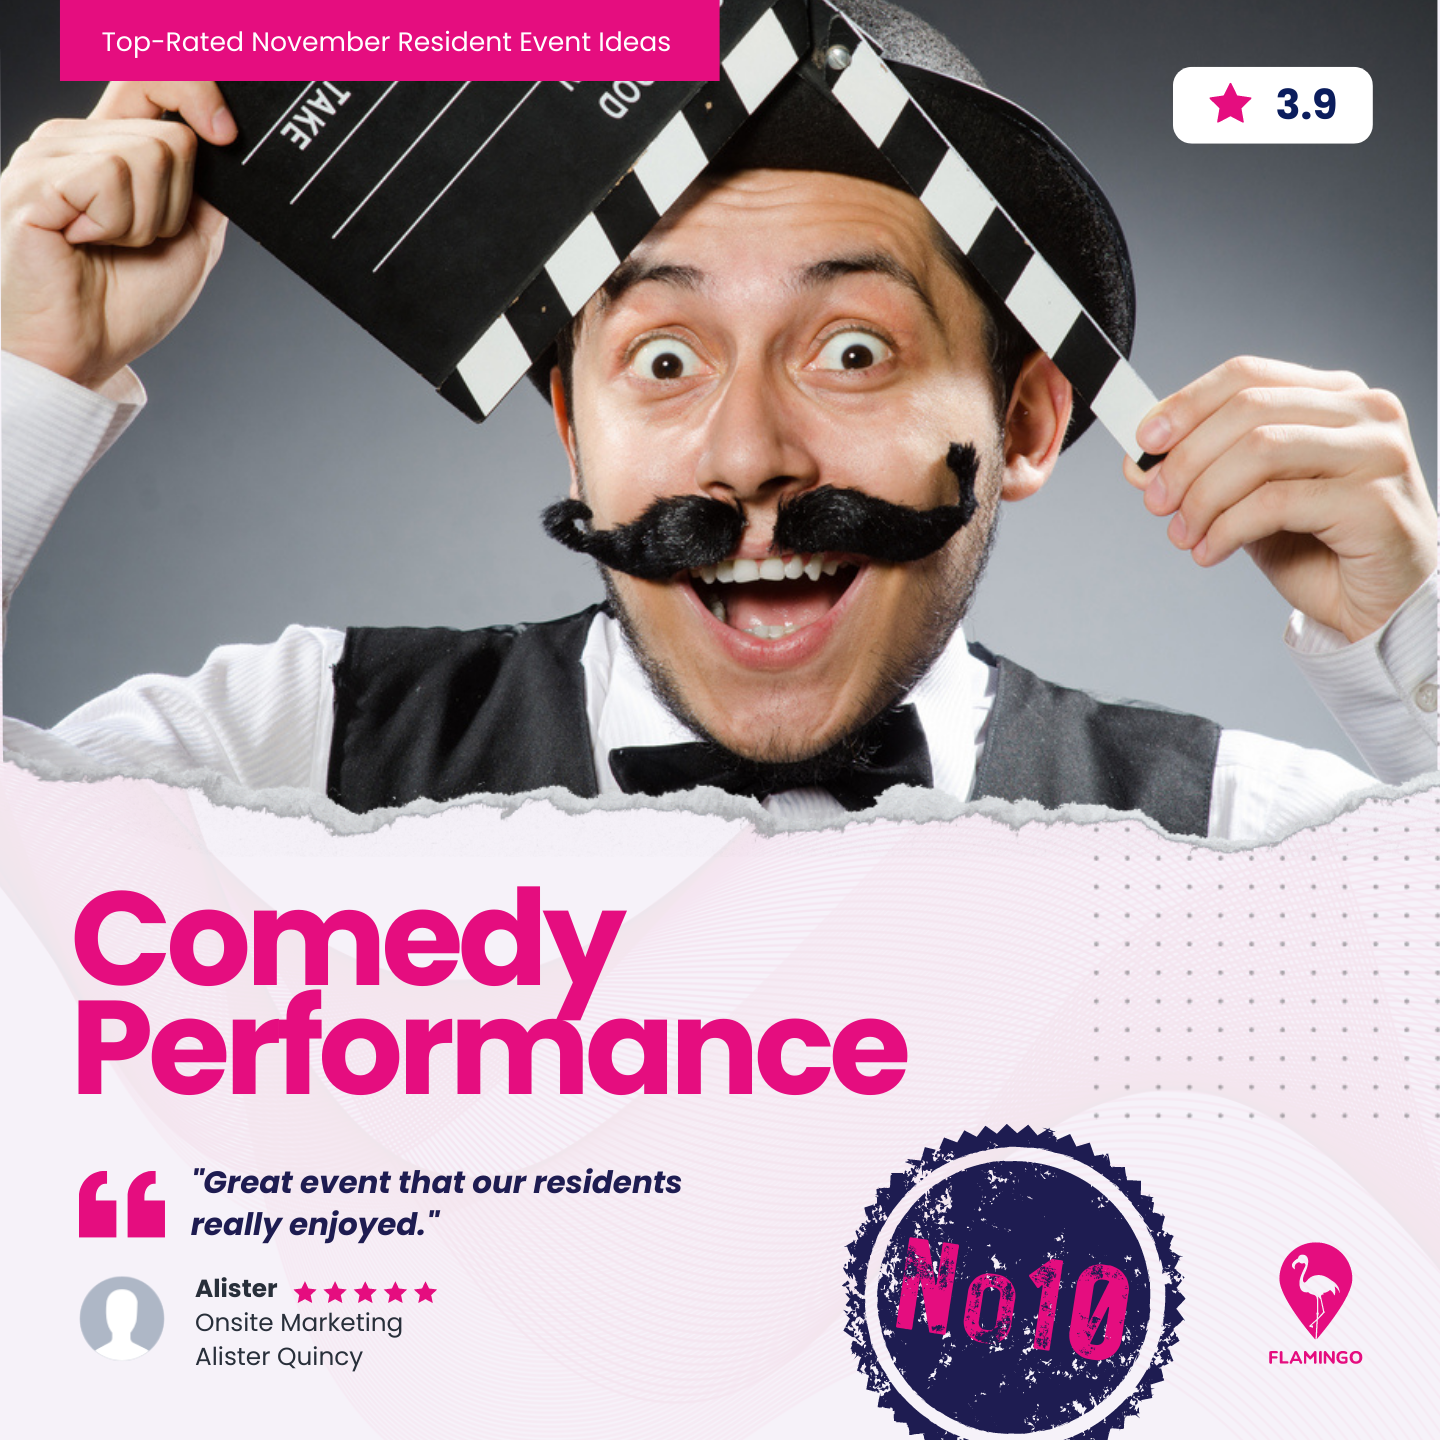 Comedy Performance | November Resident Event Ideas